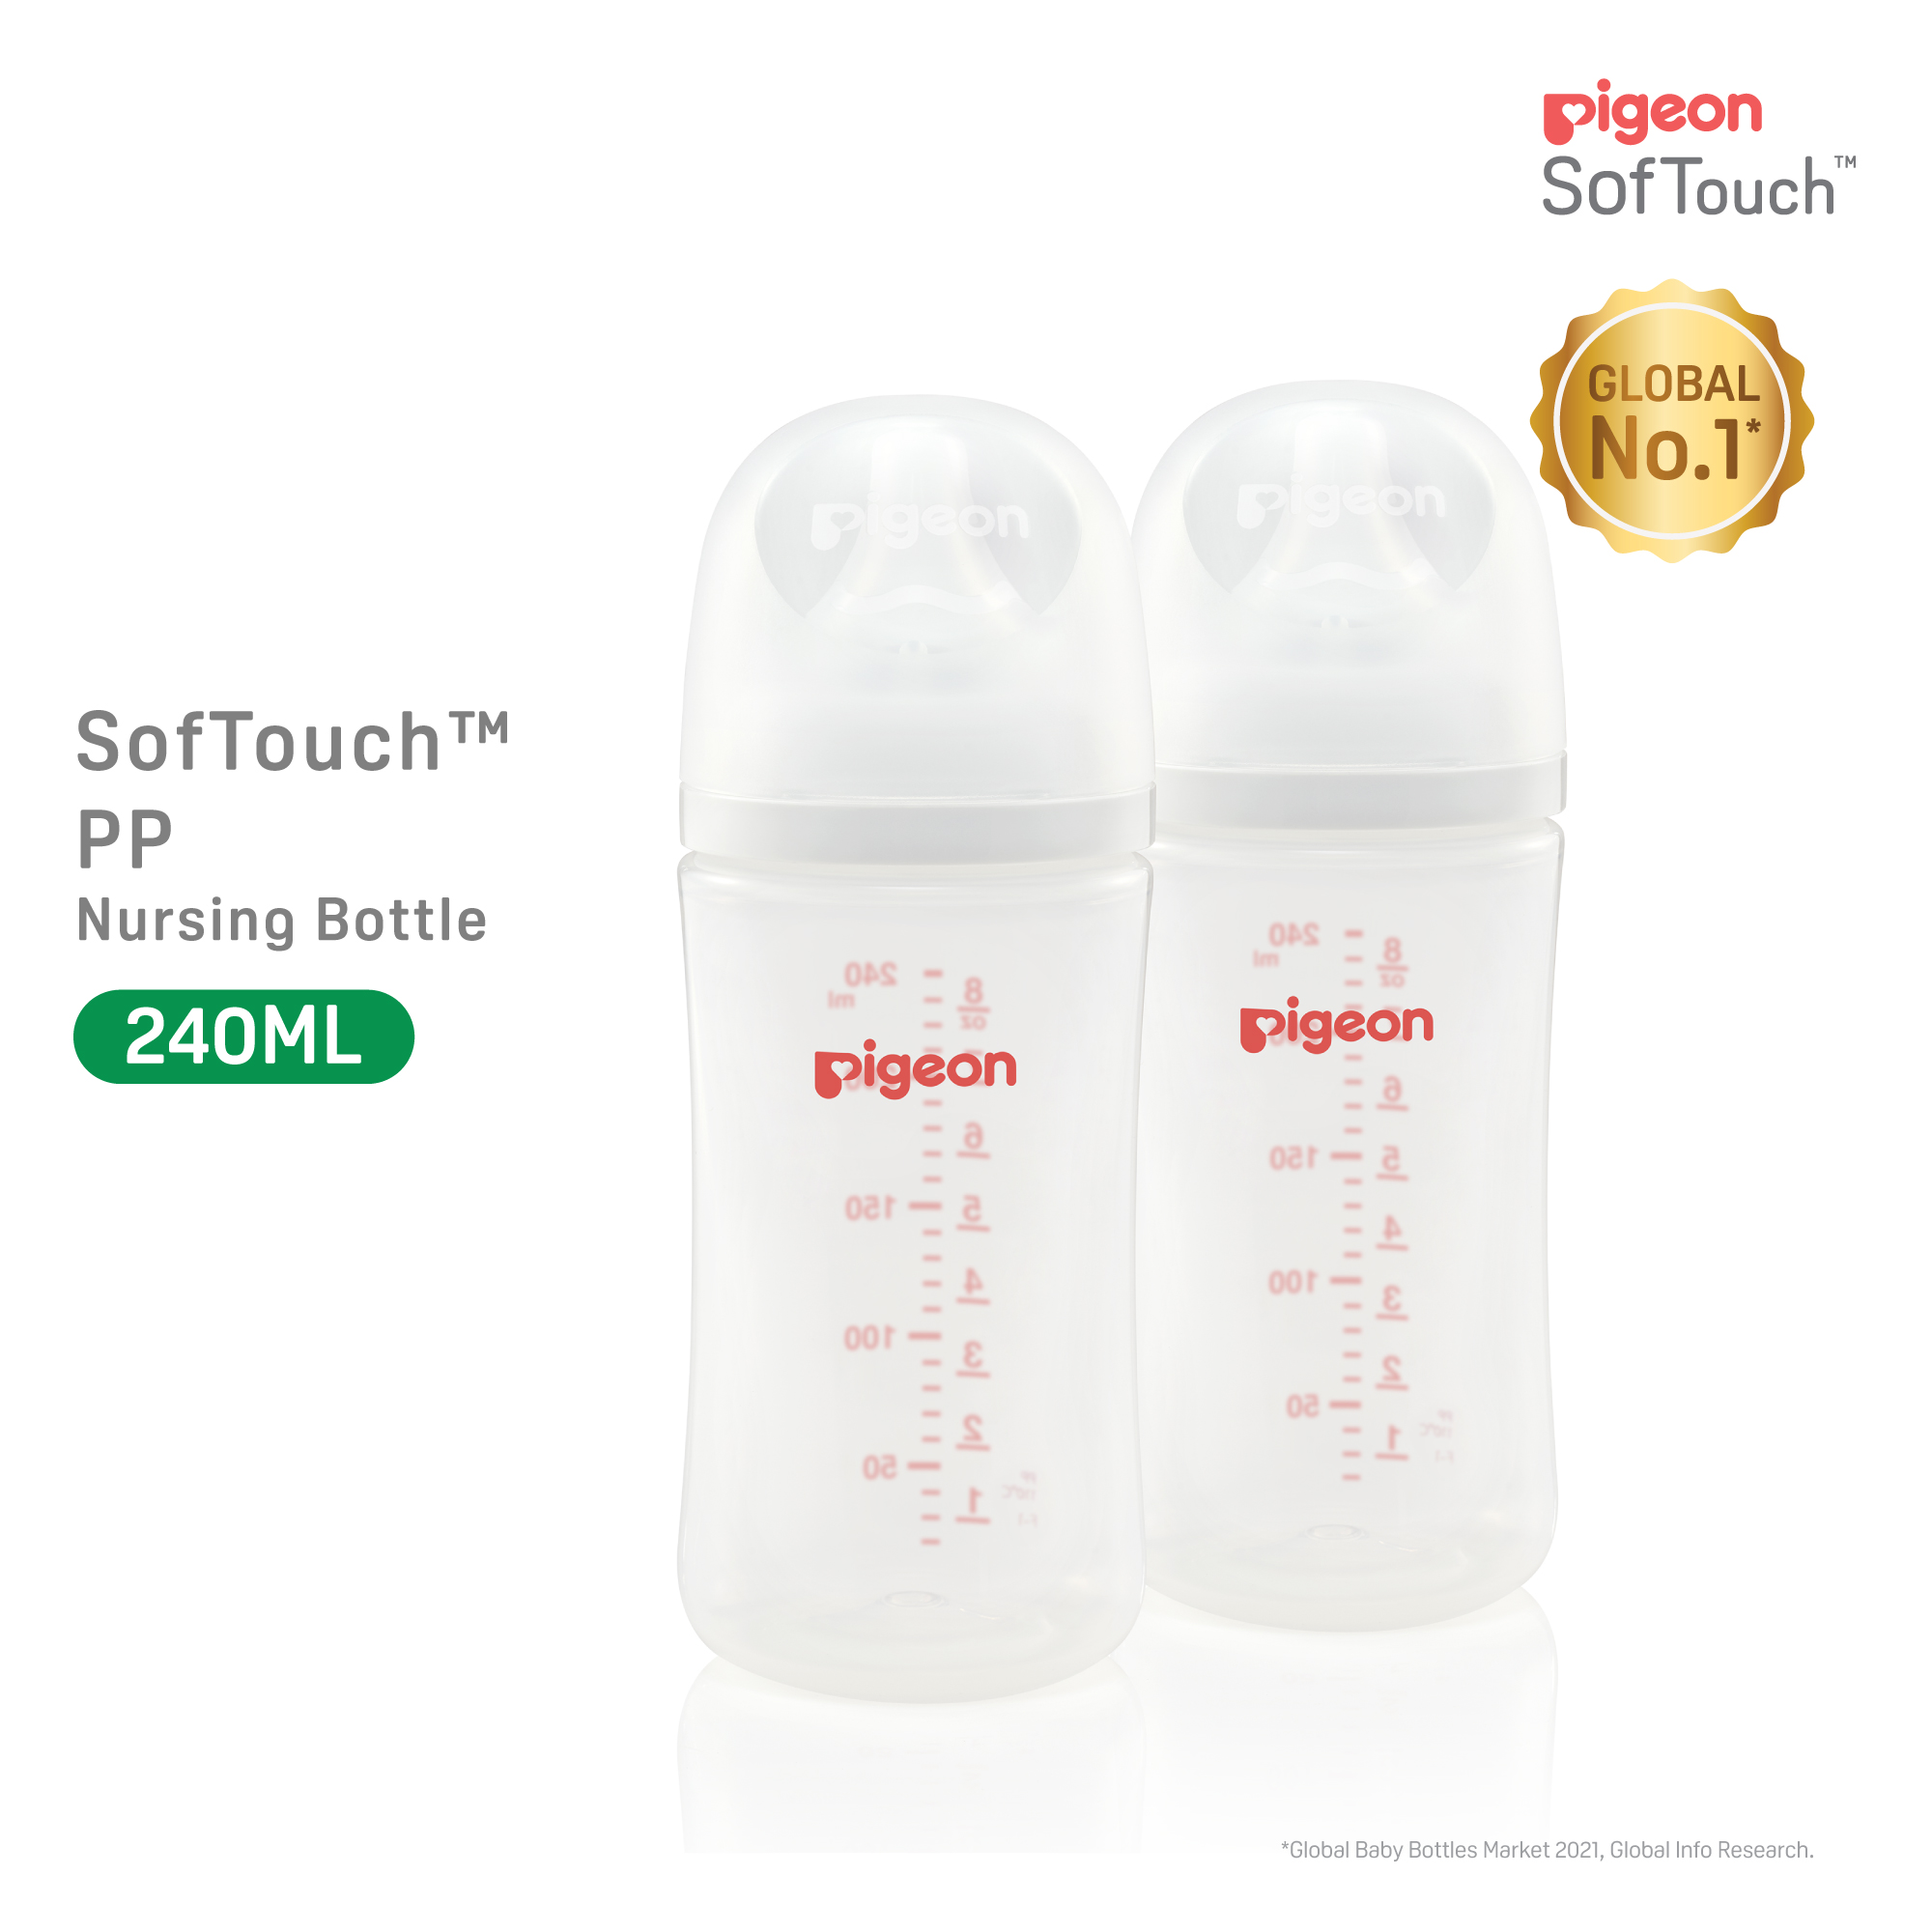 Pigeon SofTouch 3 Nursing Bottle Twin Pack PP 240ml (PG-79456)